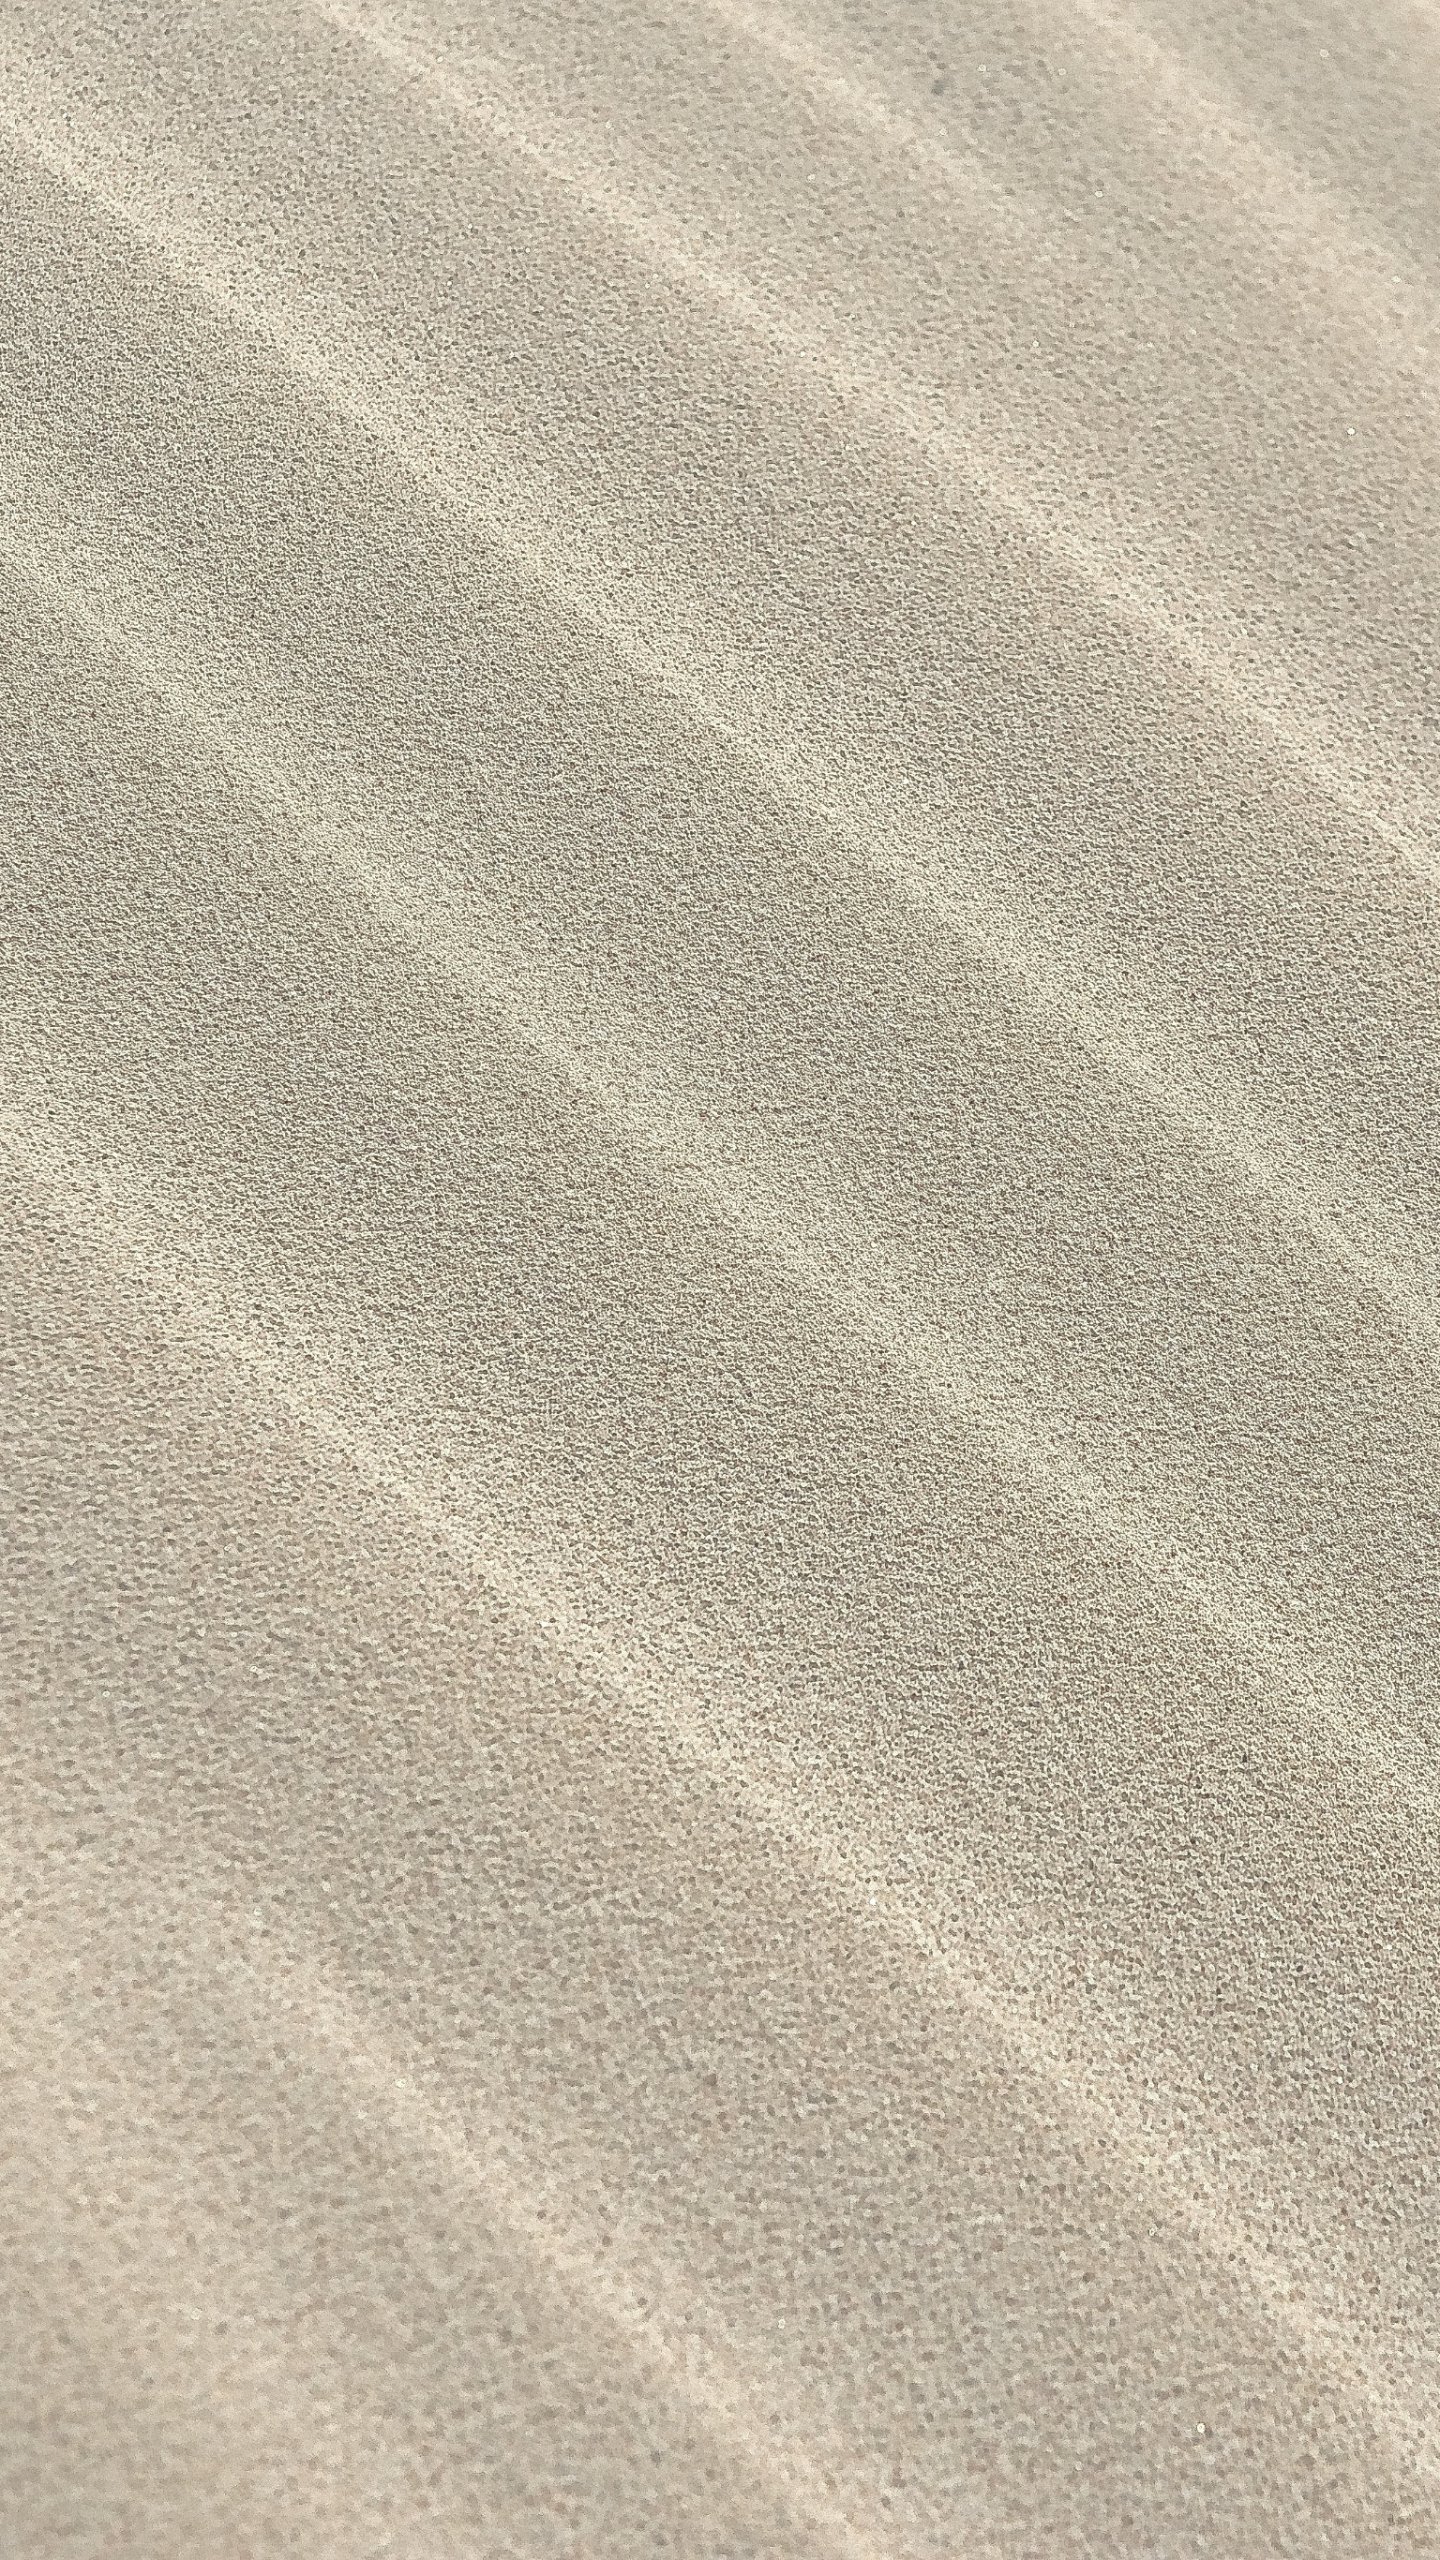 Sand Texture Wallpaper - iPhone, Android & Desktop Backgrounds